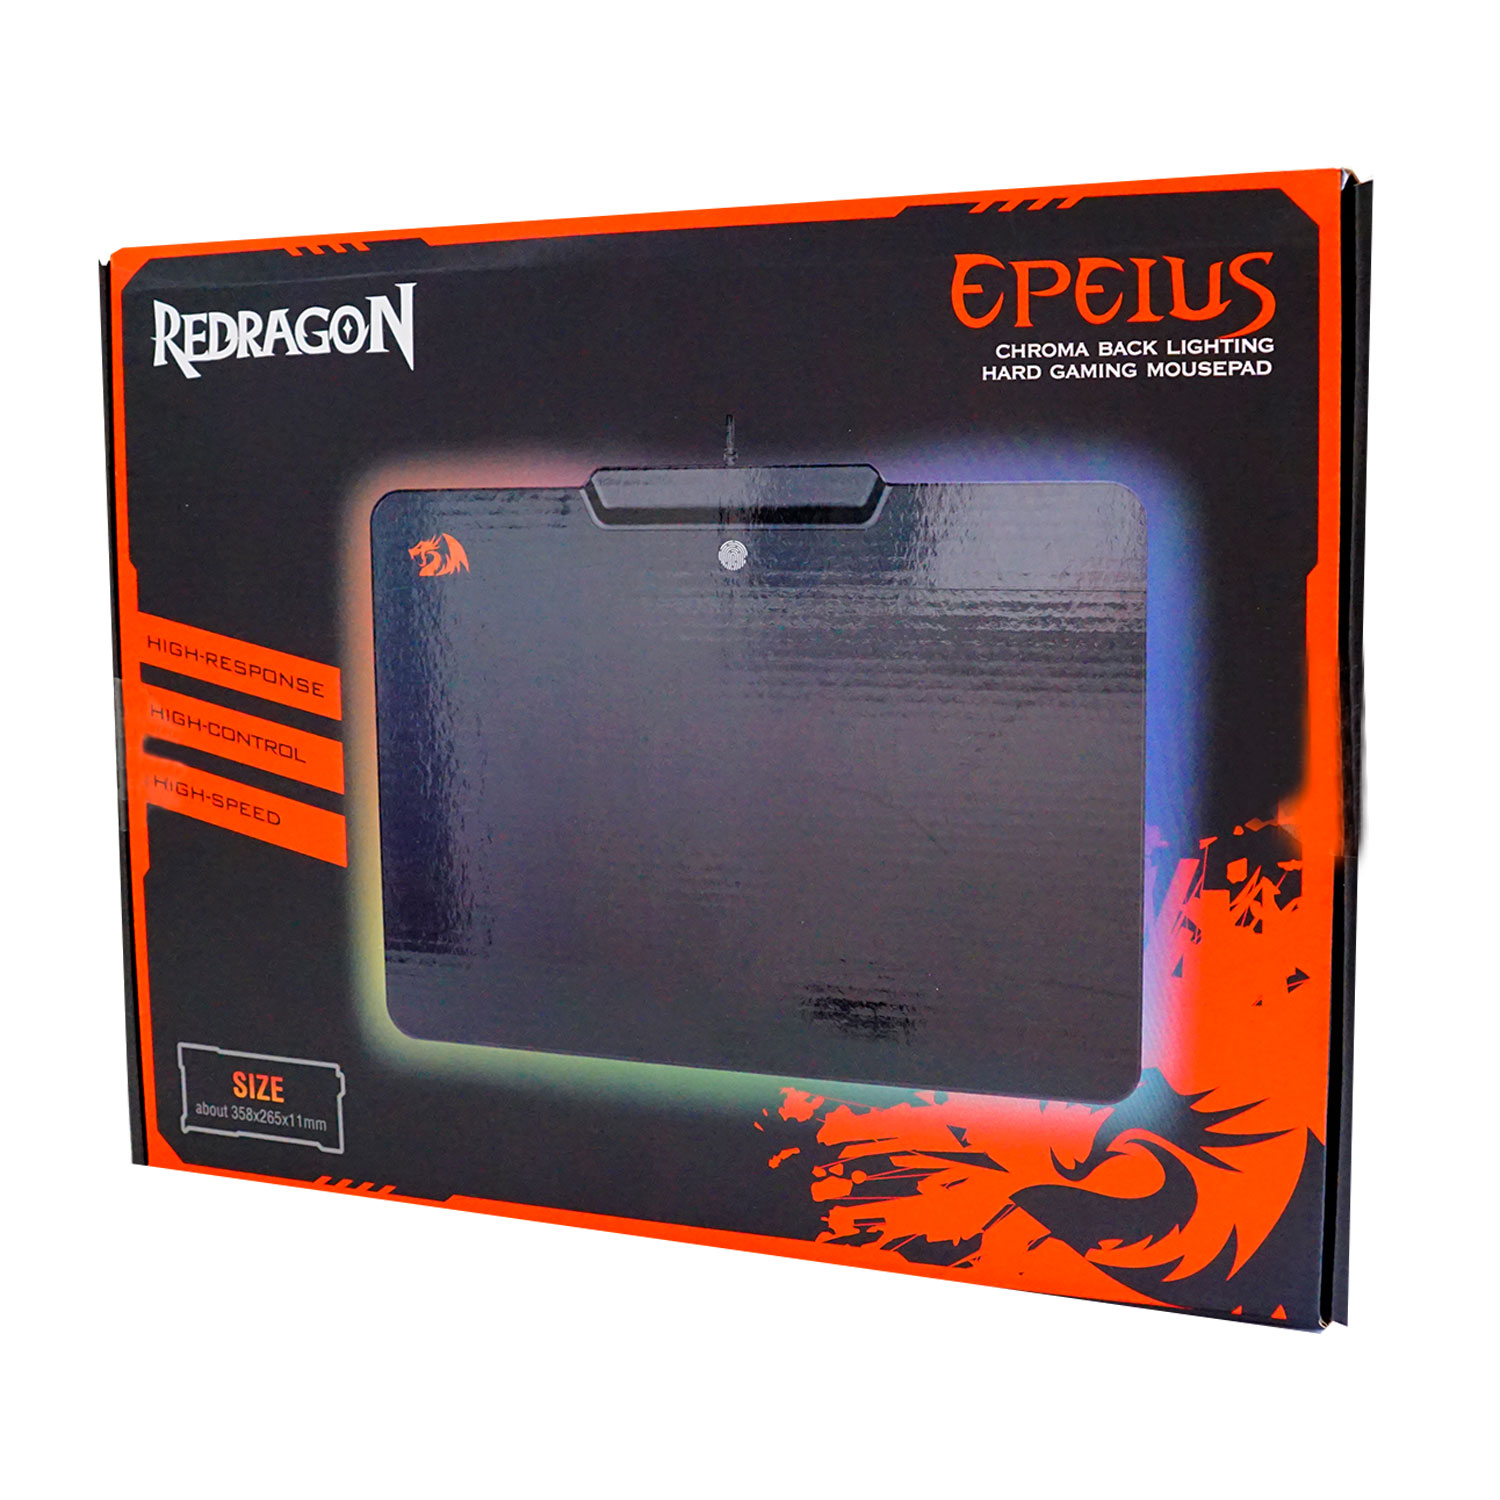 Mousepad Gamer Redragon Epeius P009 - Preto